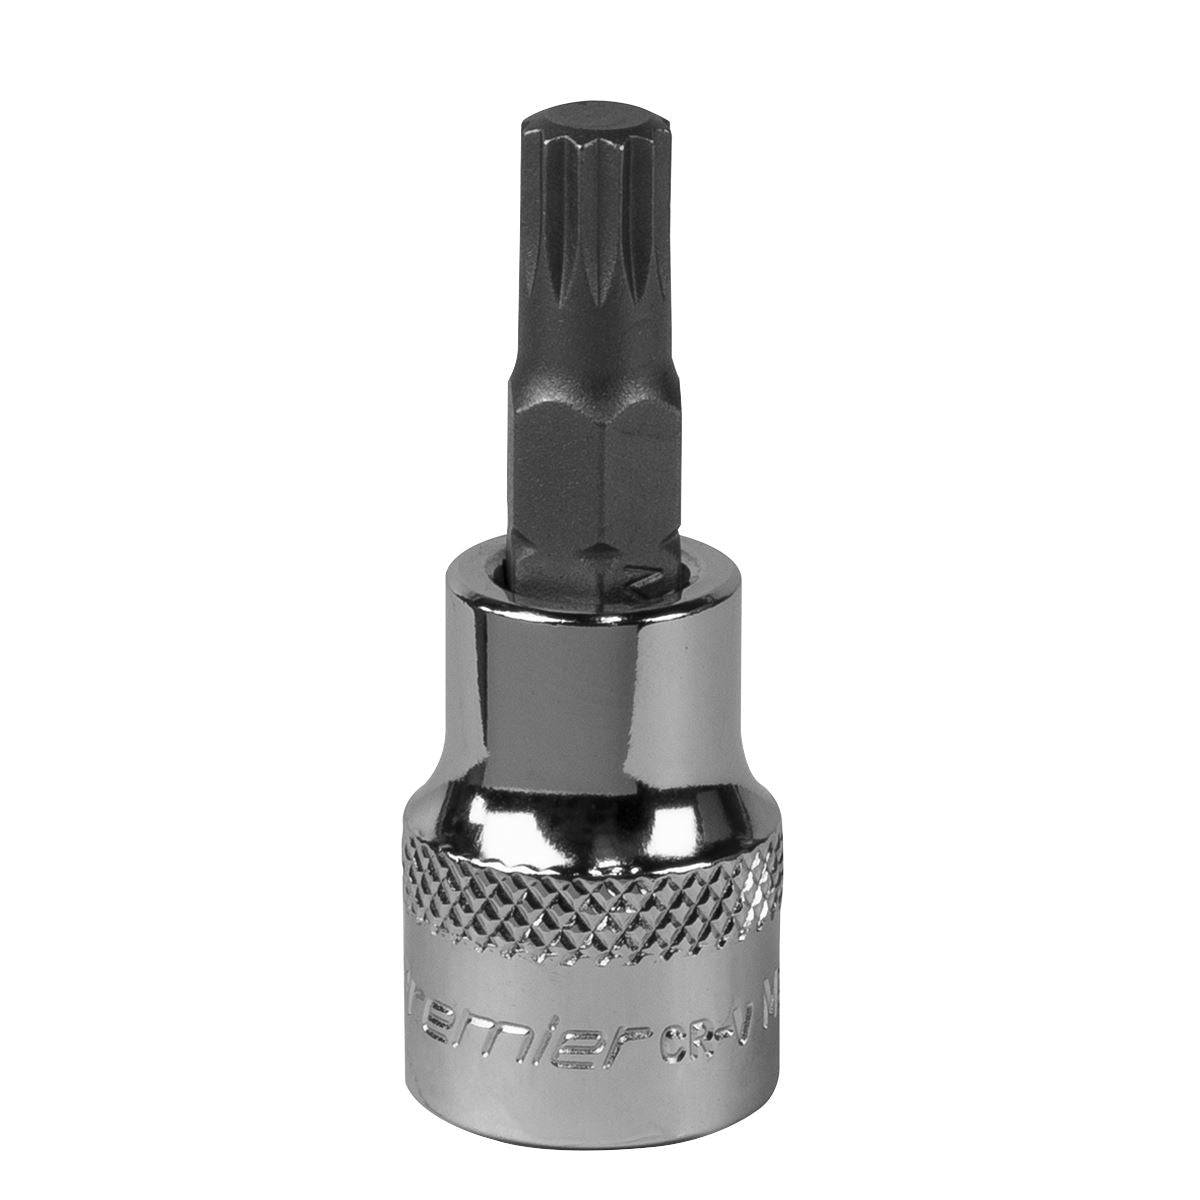 Sealey Premier Spline Socket Bit M9 3/8"Sq Drive